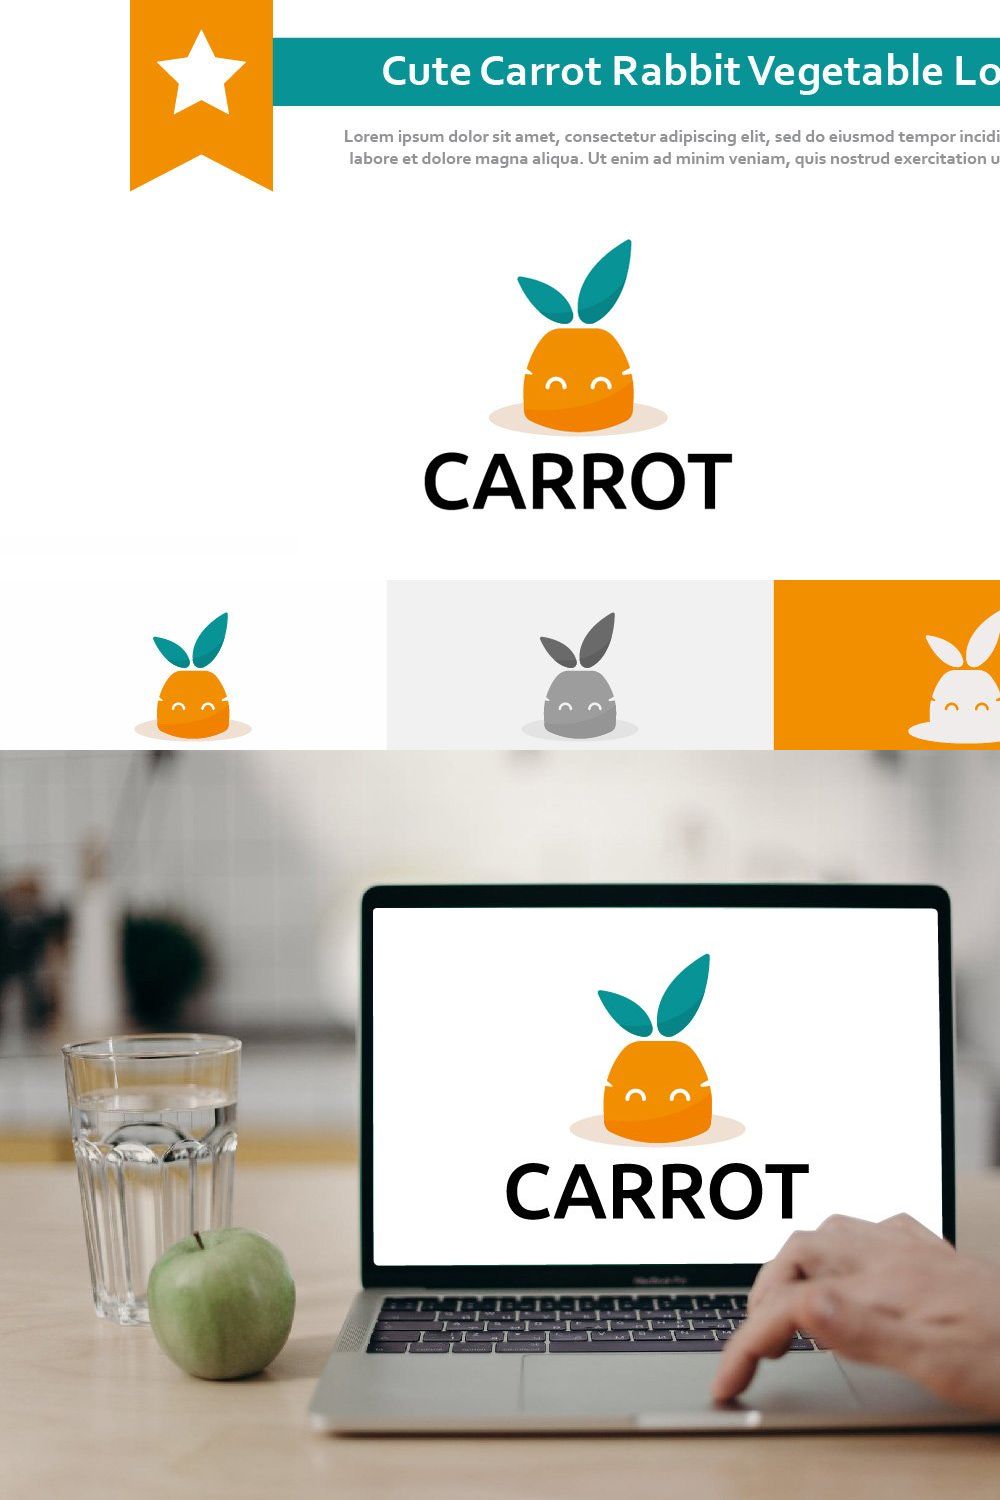 Carrot Bunny Rabbit Vegetable Logo pinterest preview image.